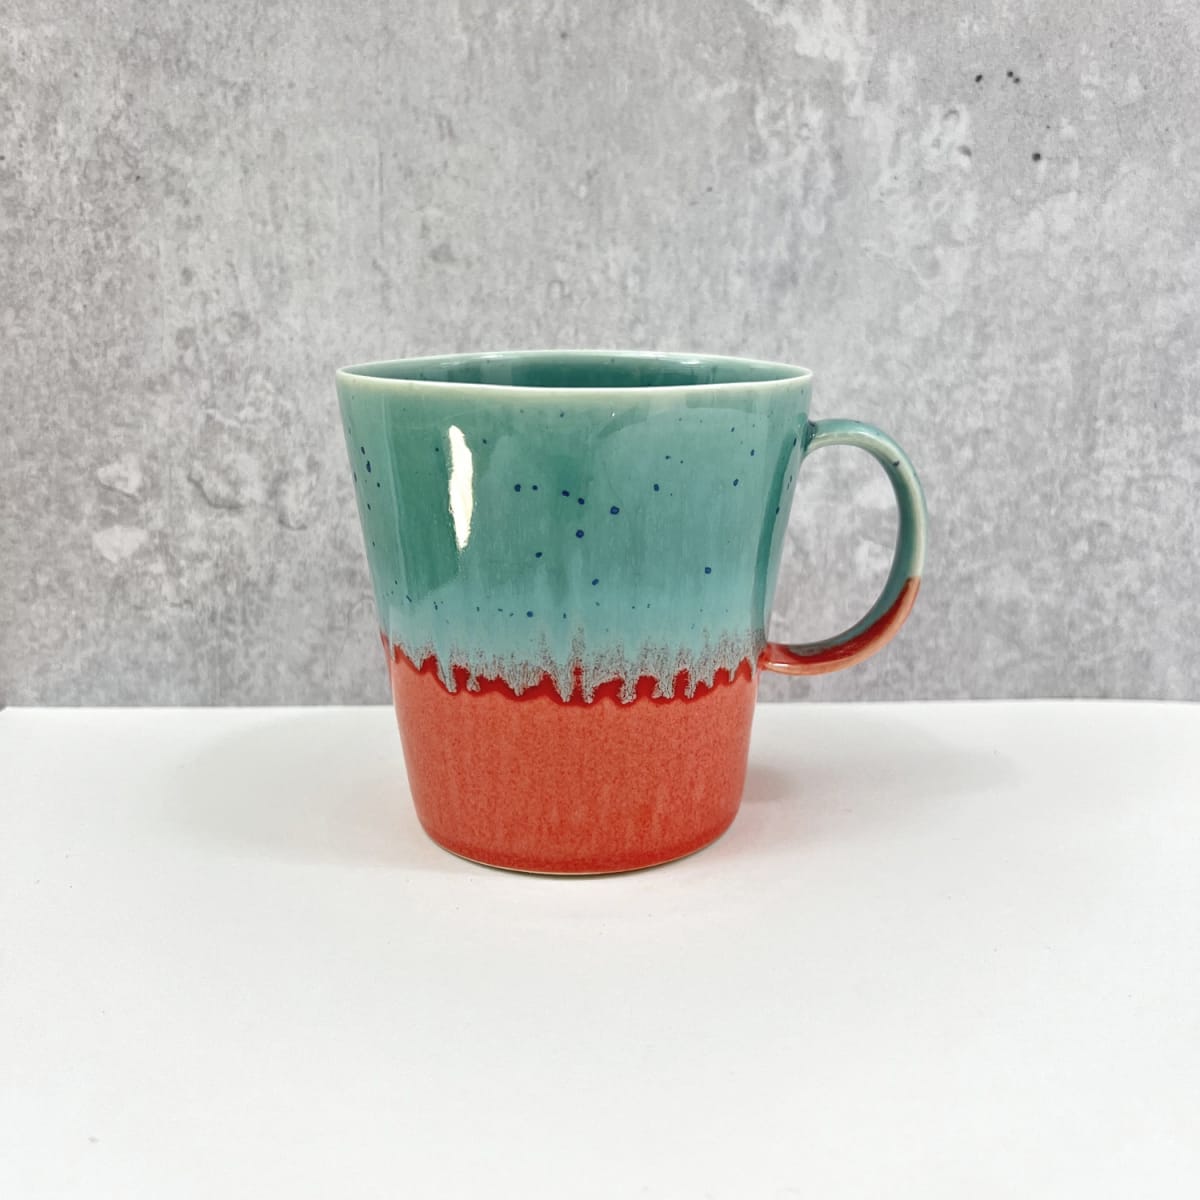 Yuta Segawa ceramic mug in two tone glaze of duck egg blue and coral